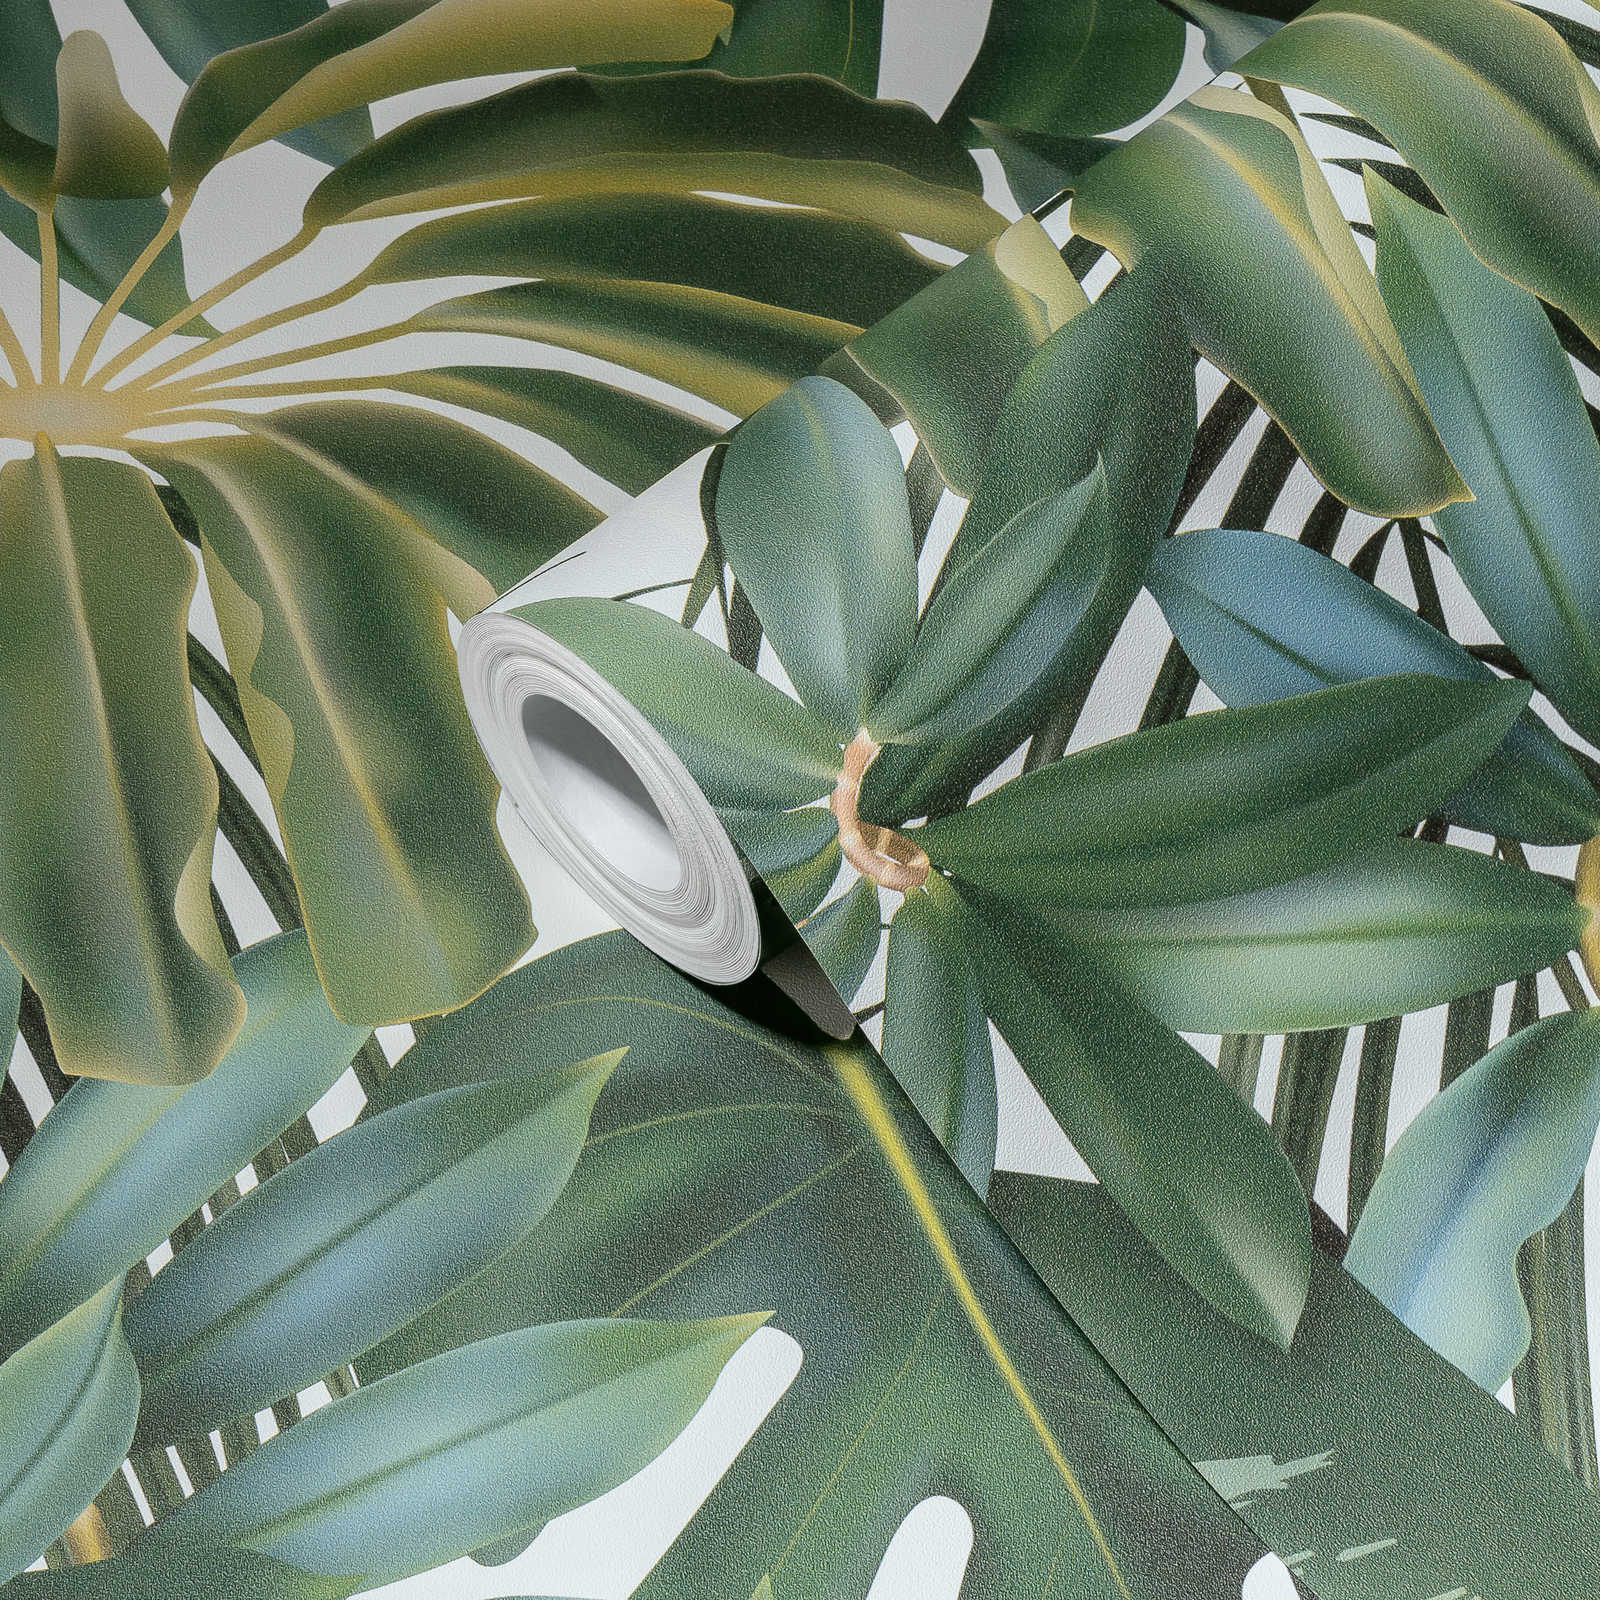             Leaves wallpaper jungle pattern - green, cream
        